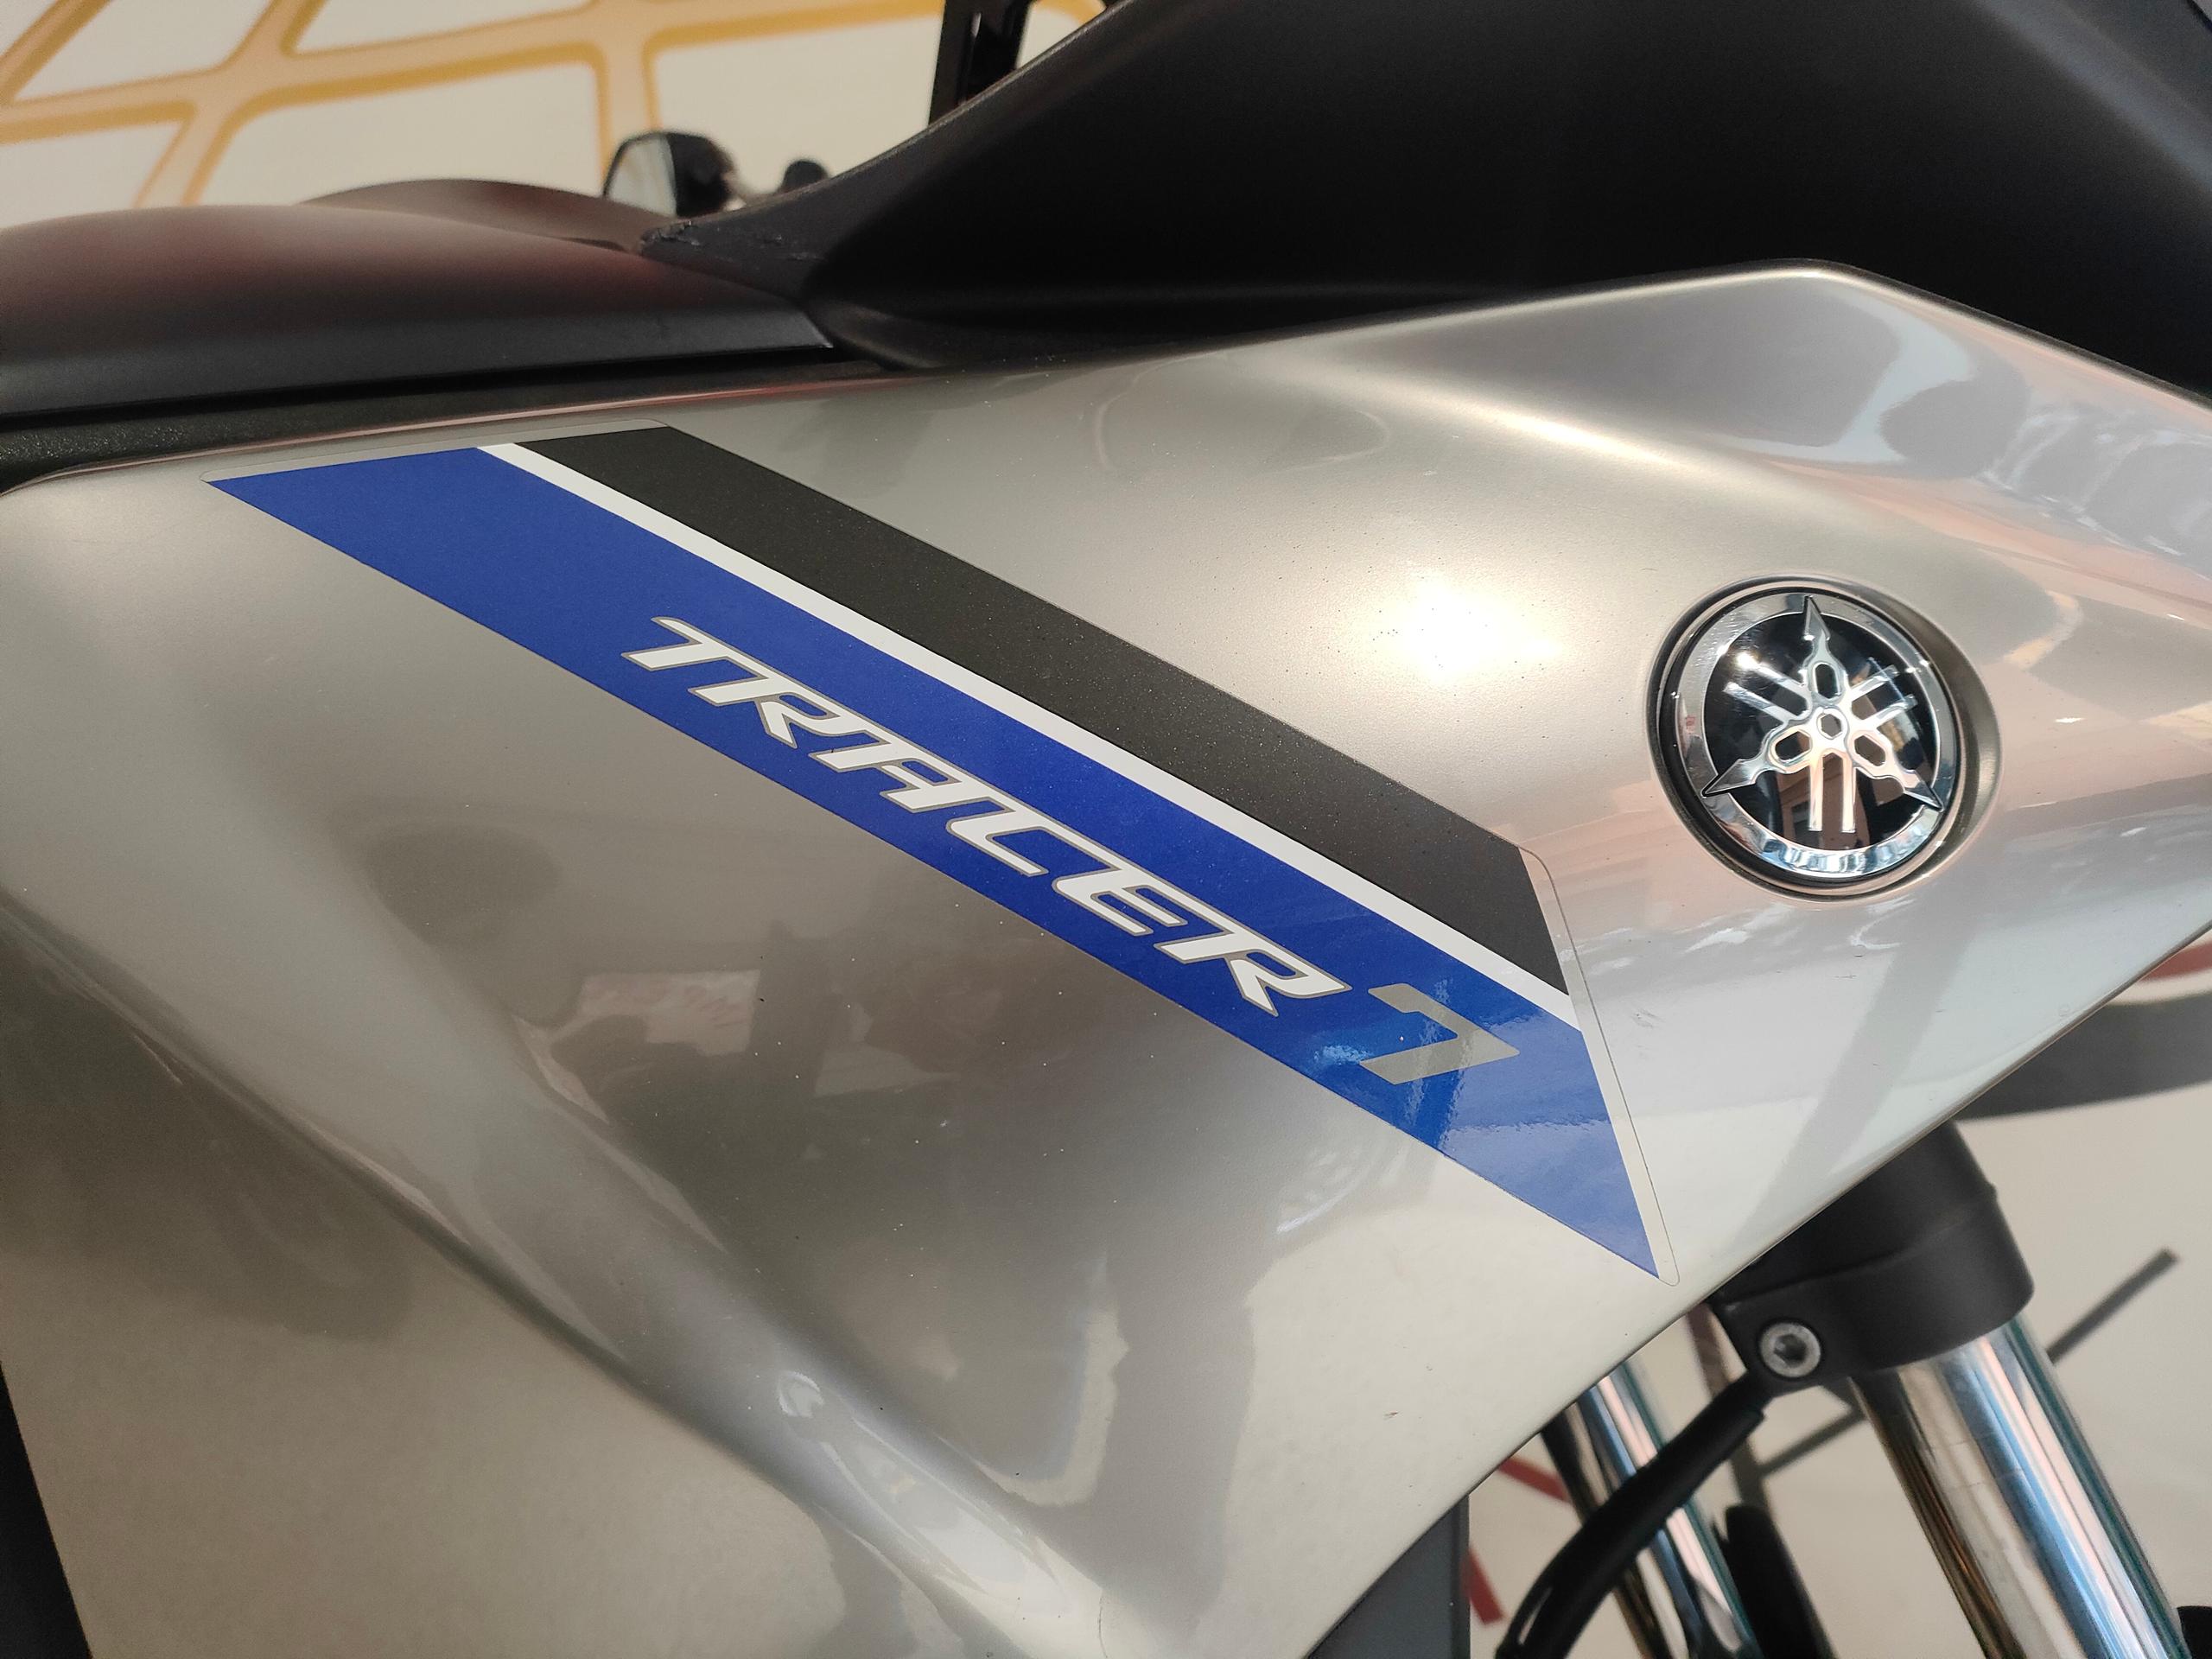 Yamaha Tracer 7 2022 Km 20724